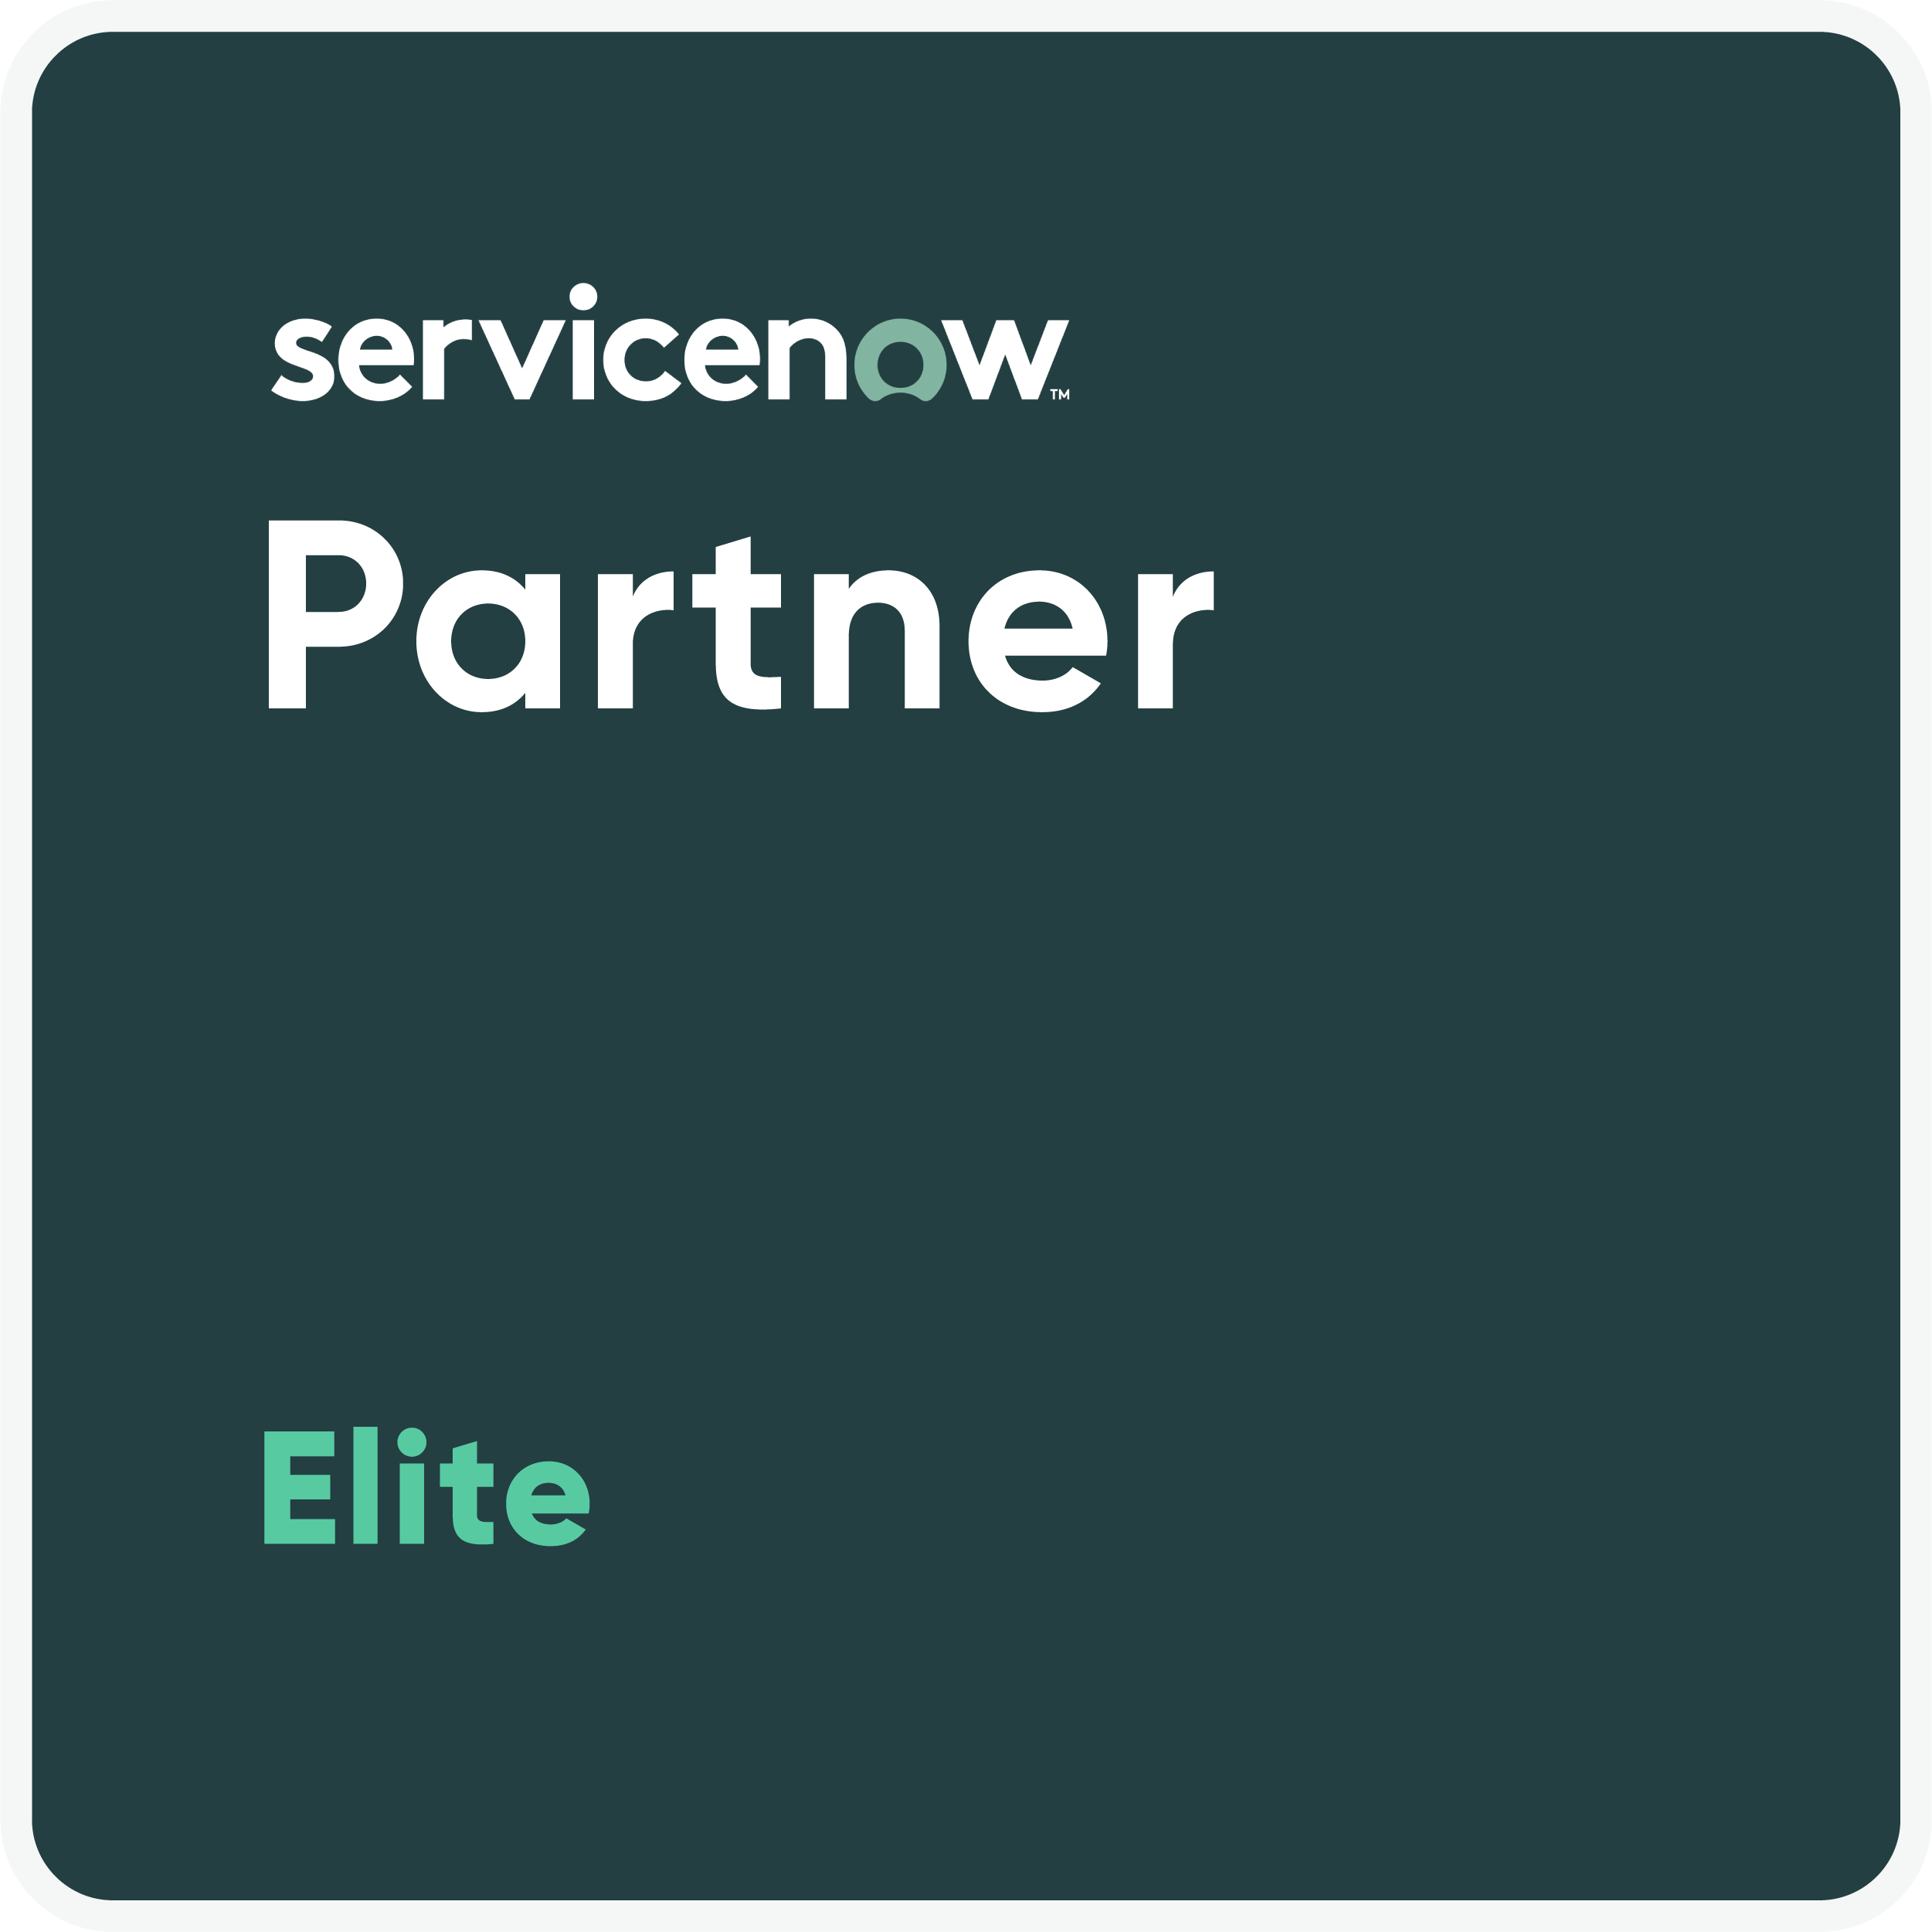 ServiceNow Elite Partner badge